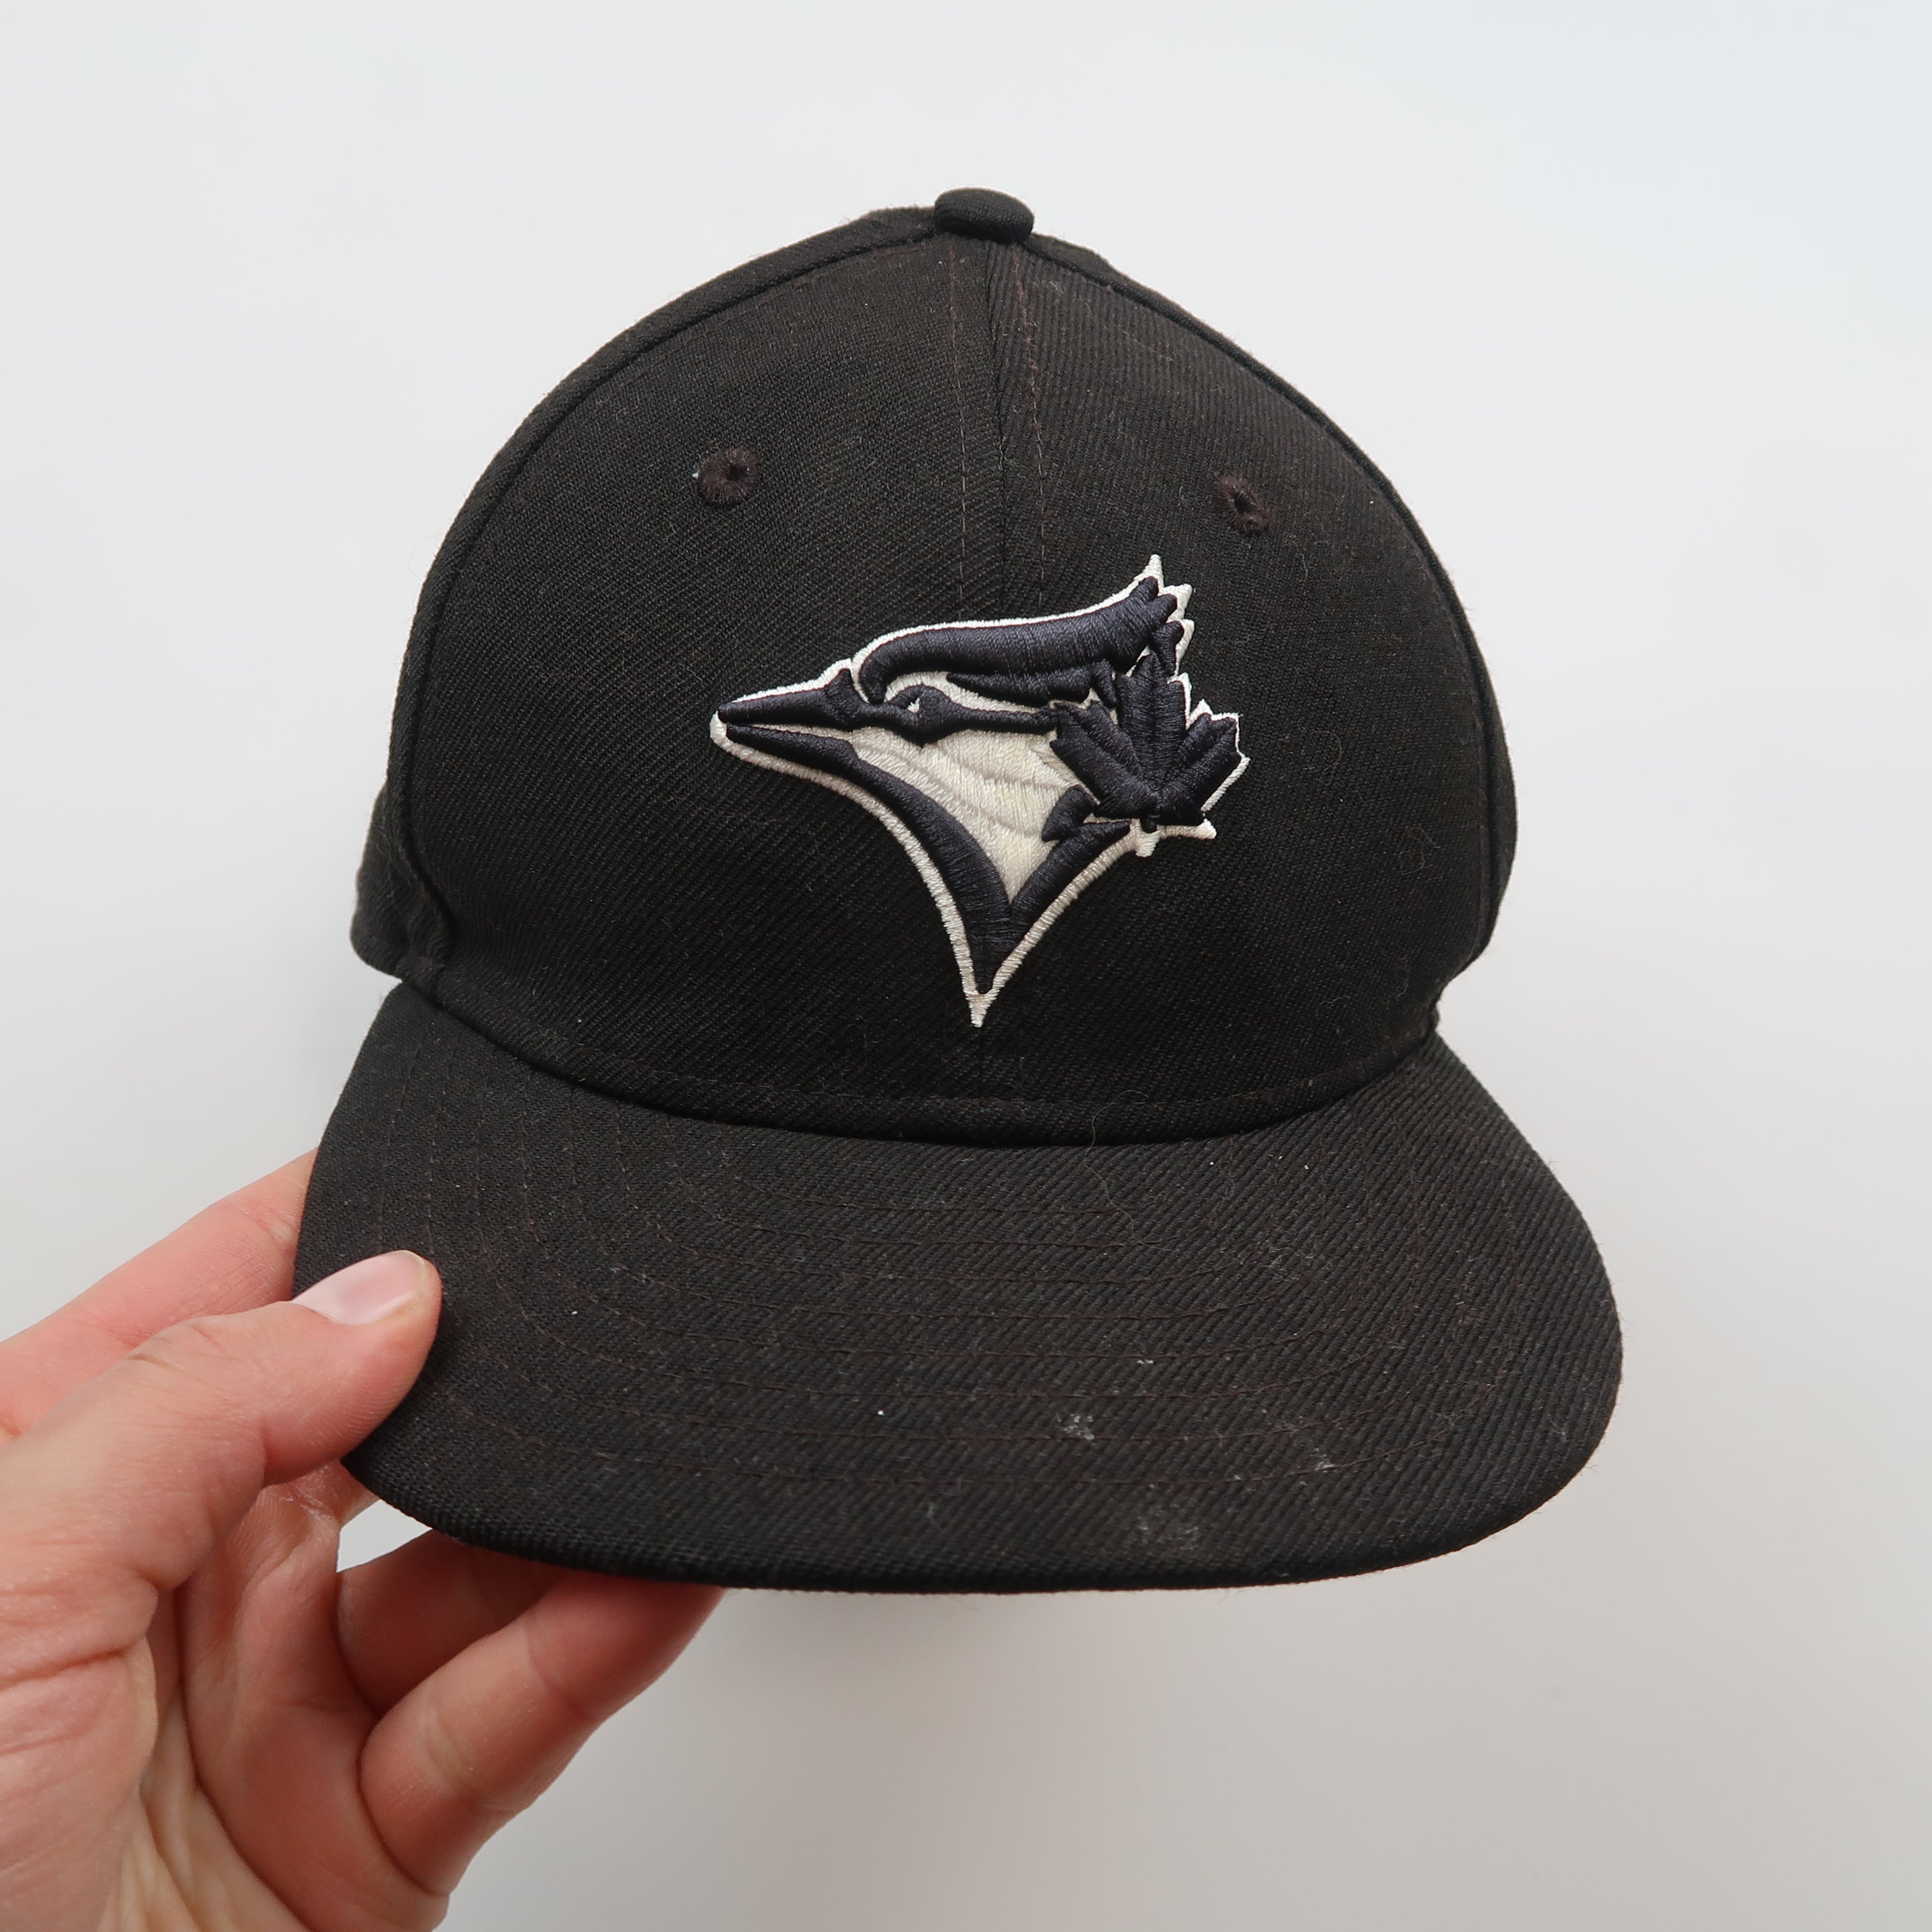 Blue Jays - Hat (Size 6 3/8)